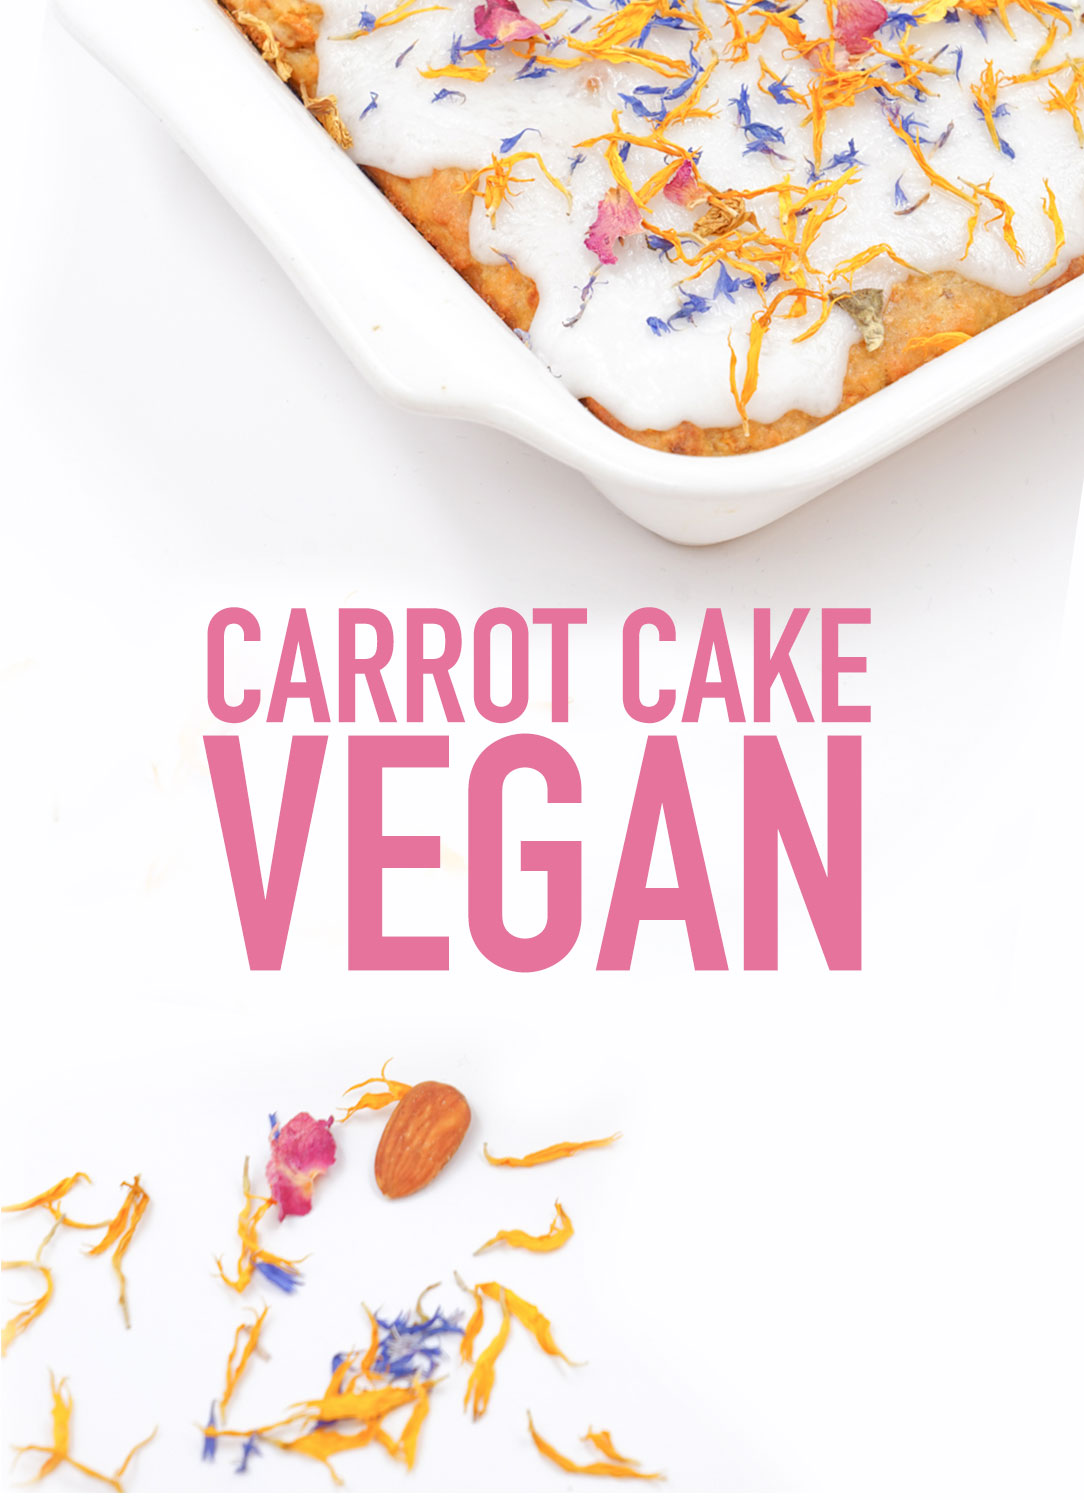 carrot cake vegan recette